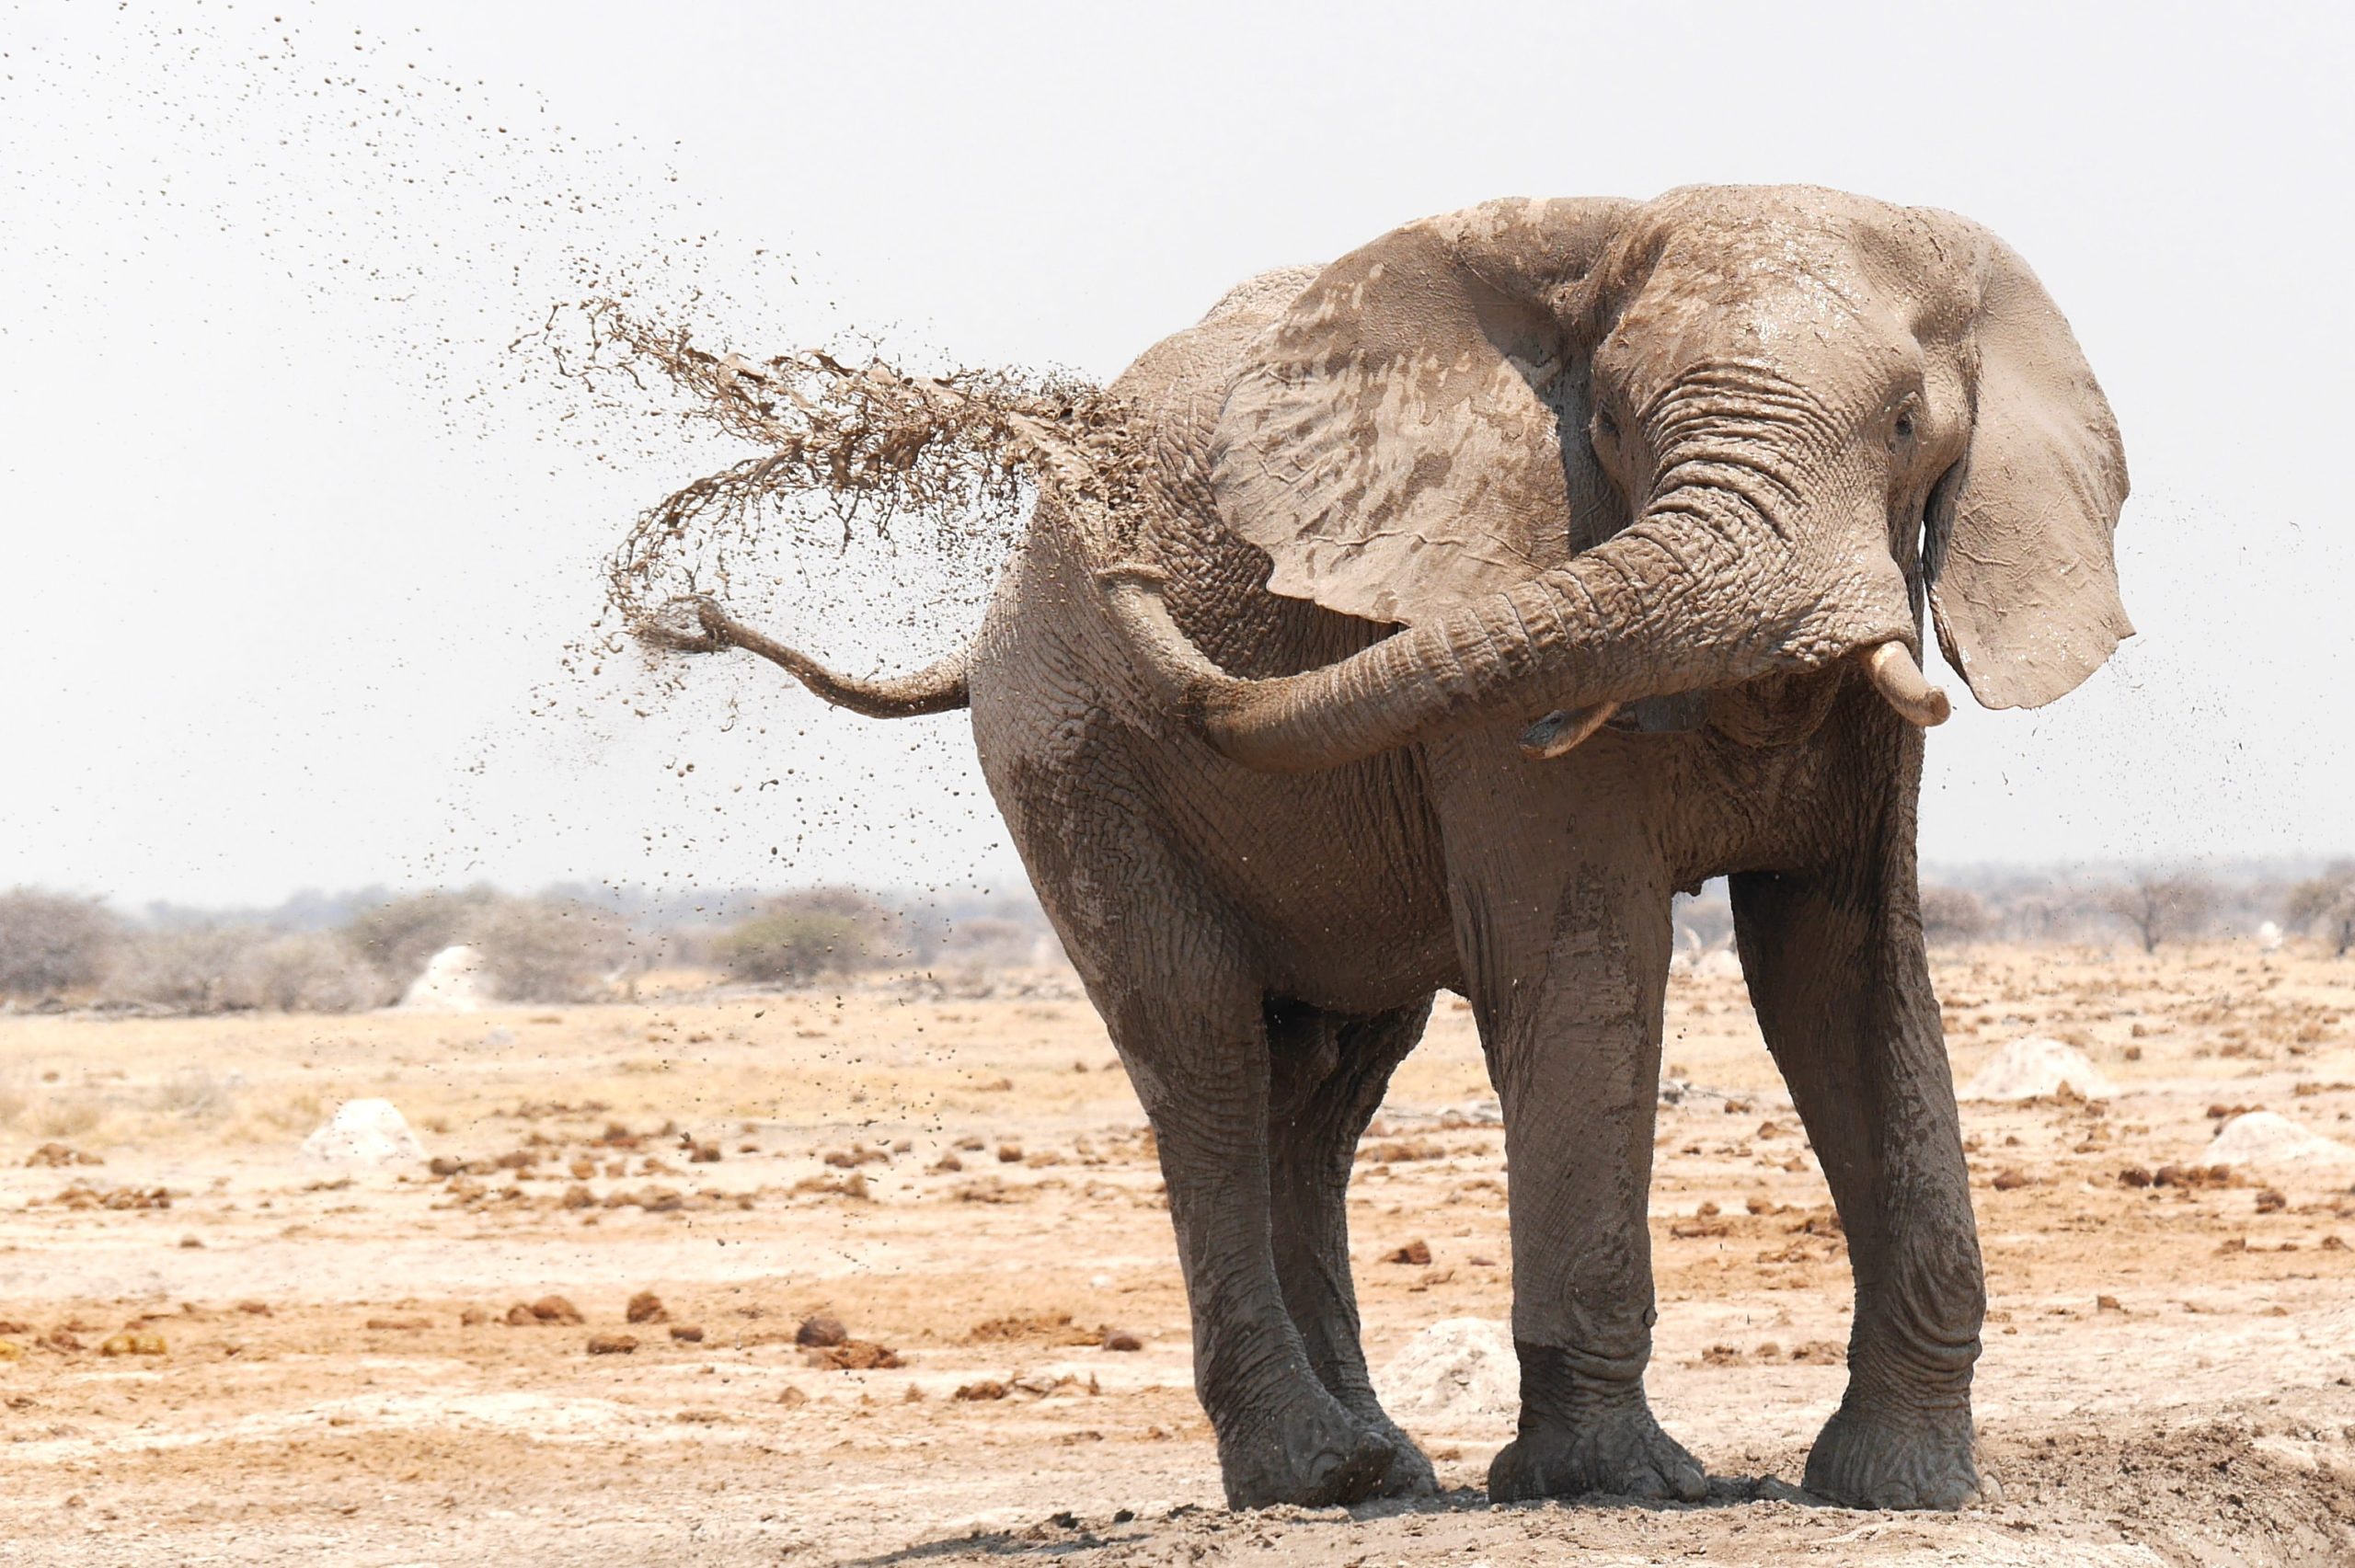 Elephant gives itself a mud bath in Botswana